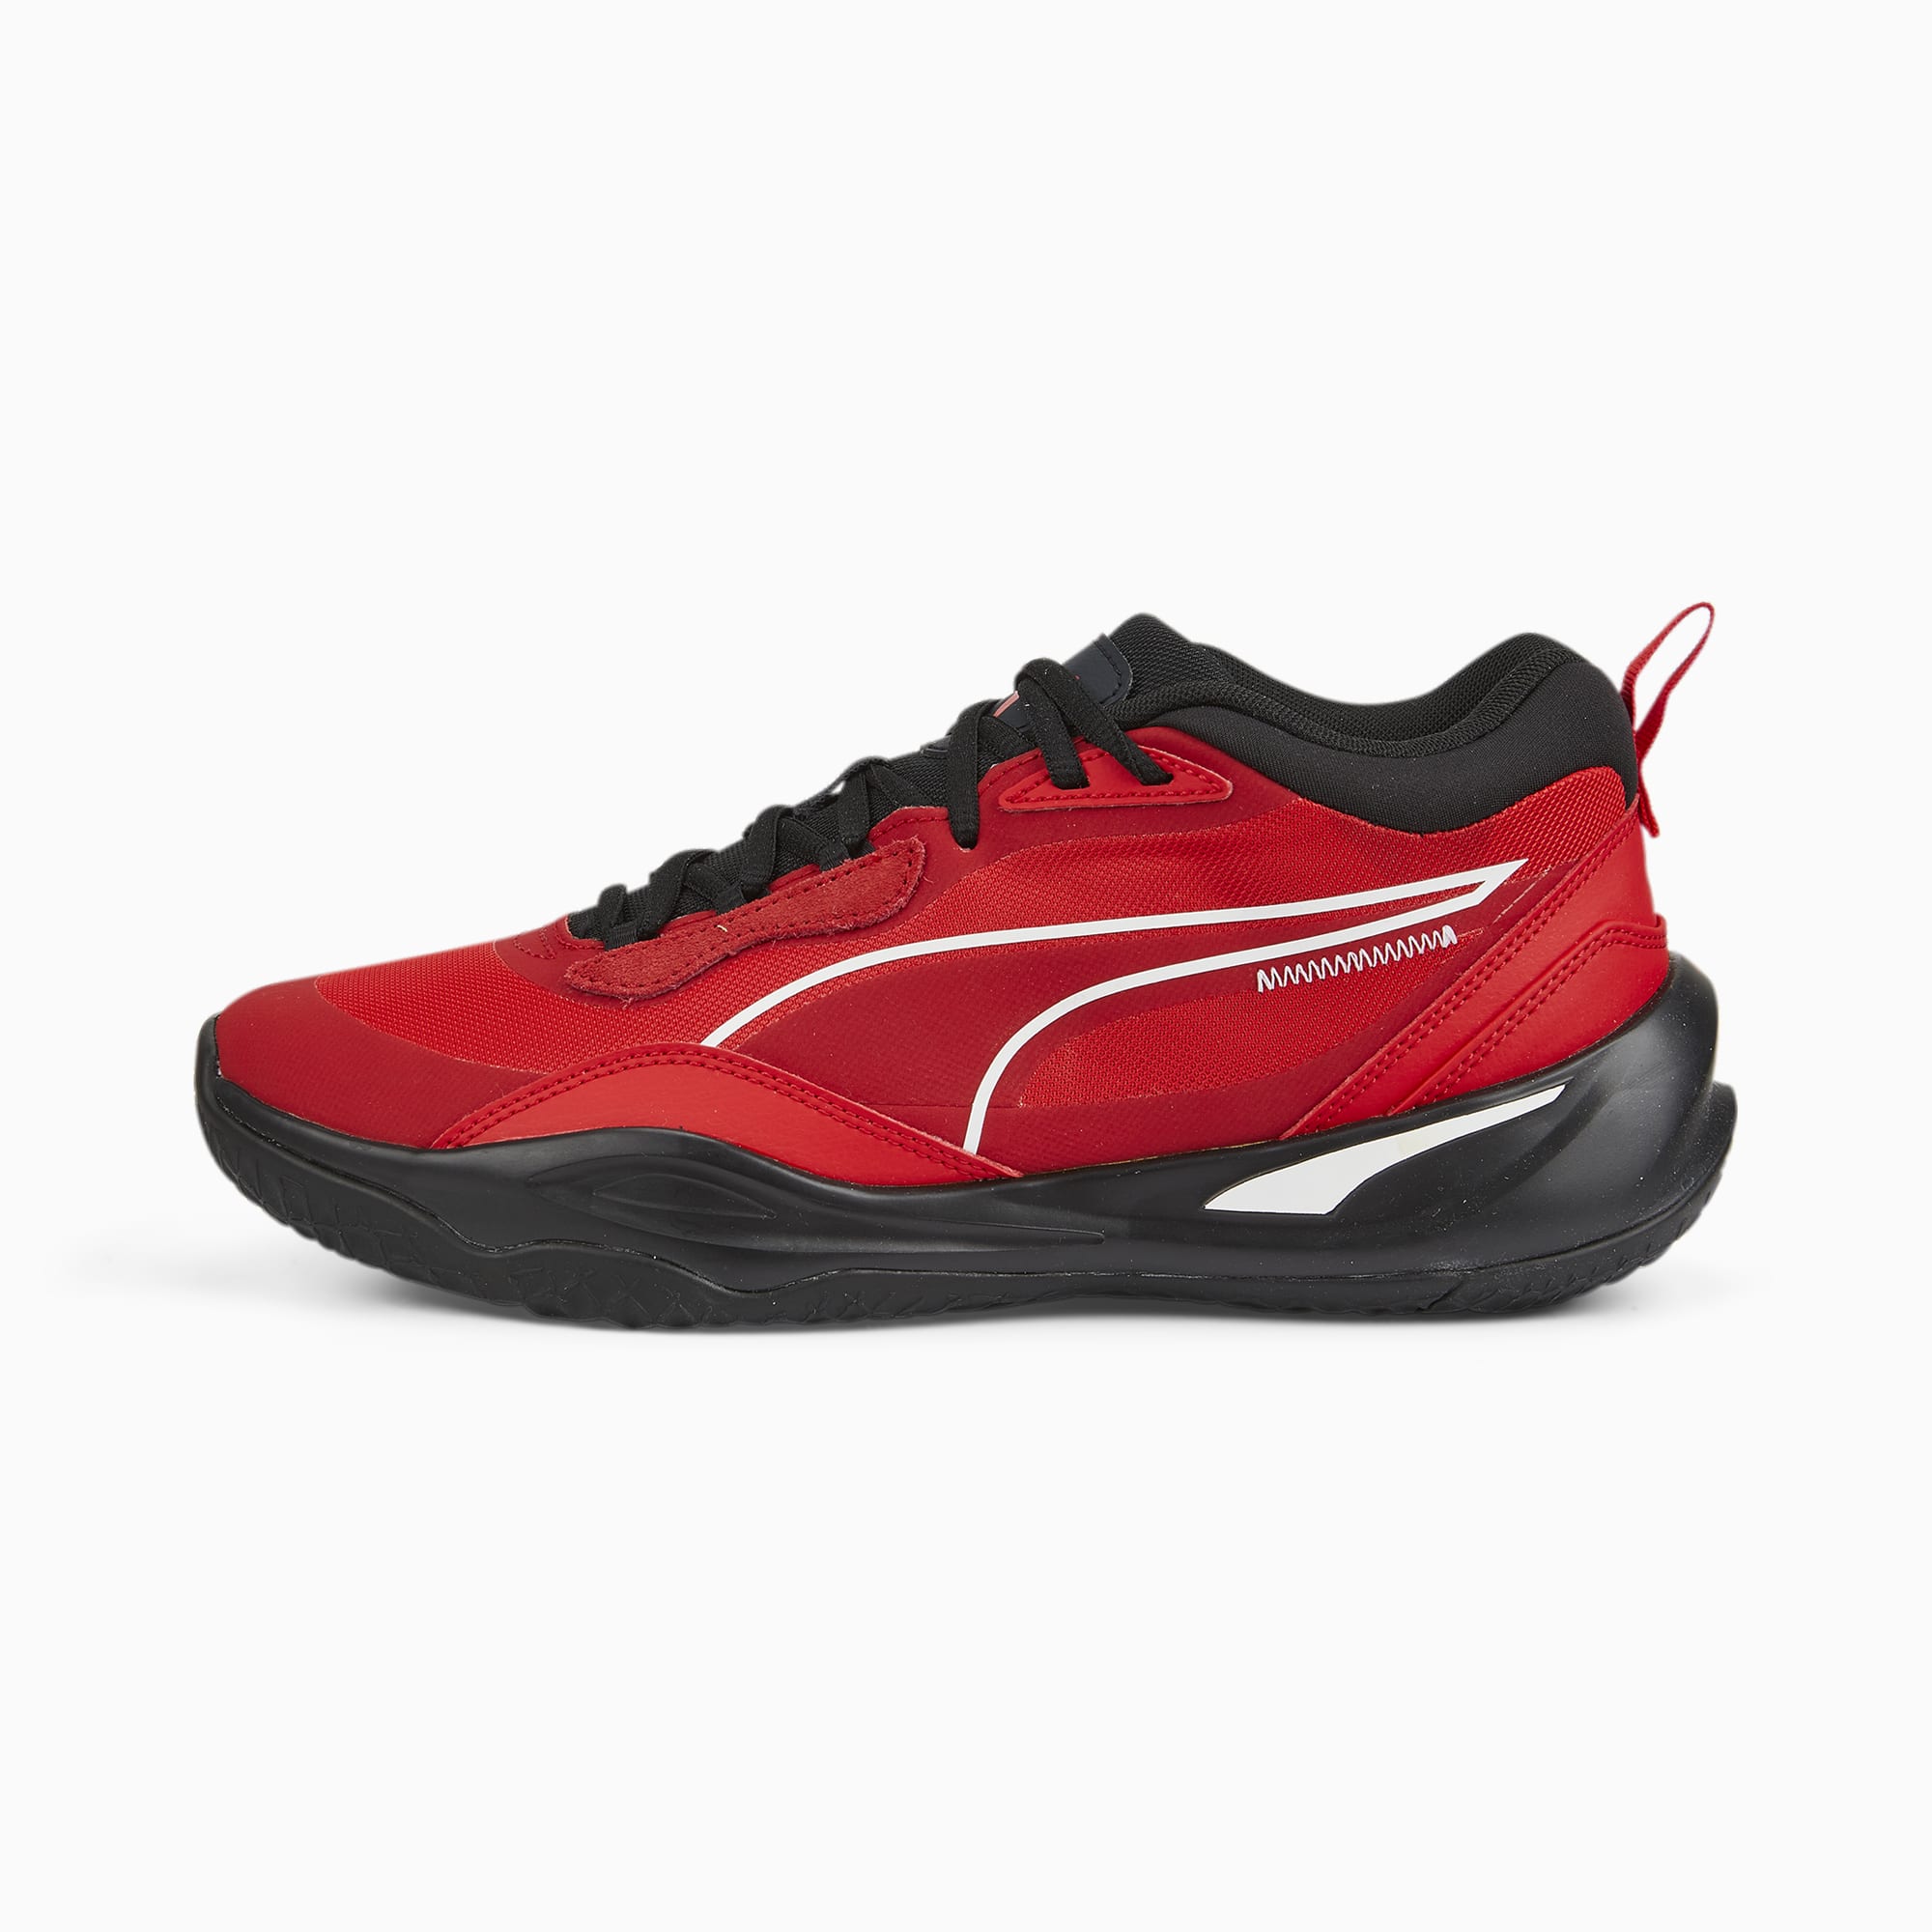 Playmaker Pro Basketball Shoes | High Risk Red-Jet Black | PUMA ...